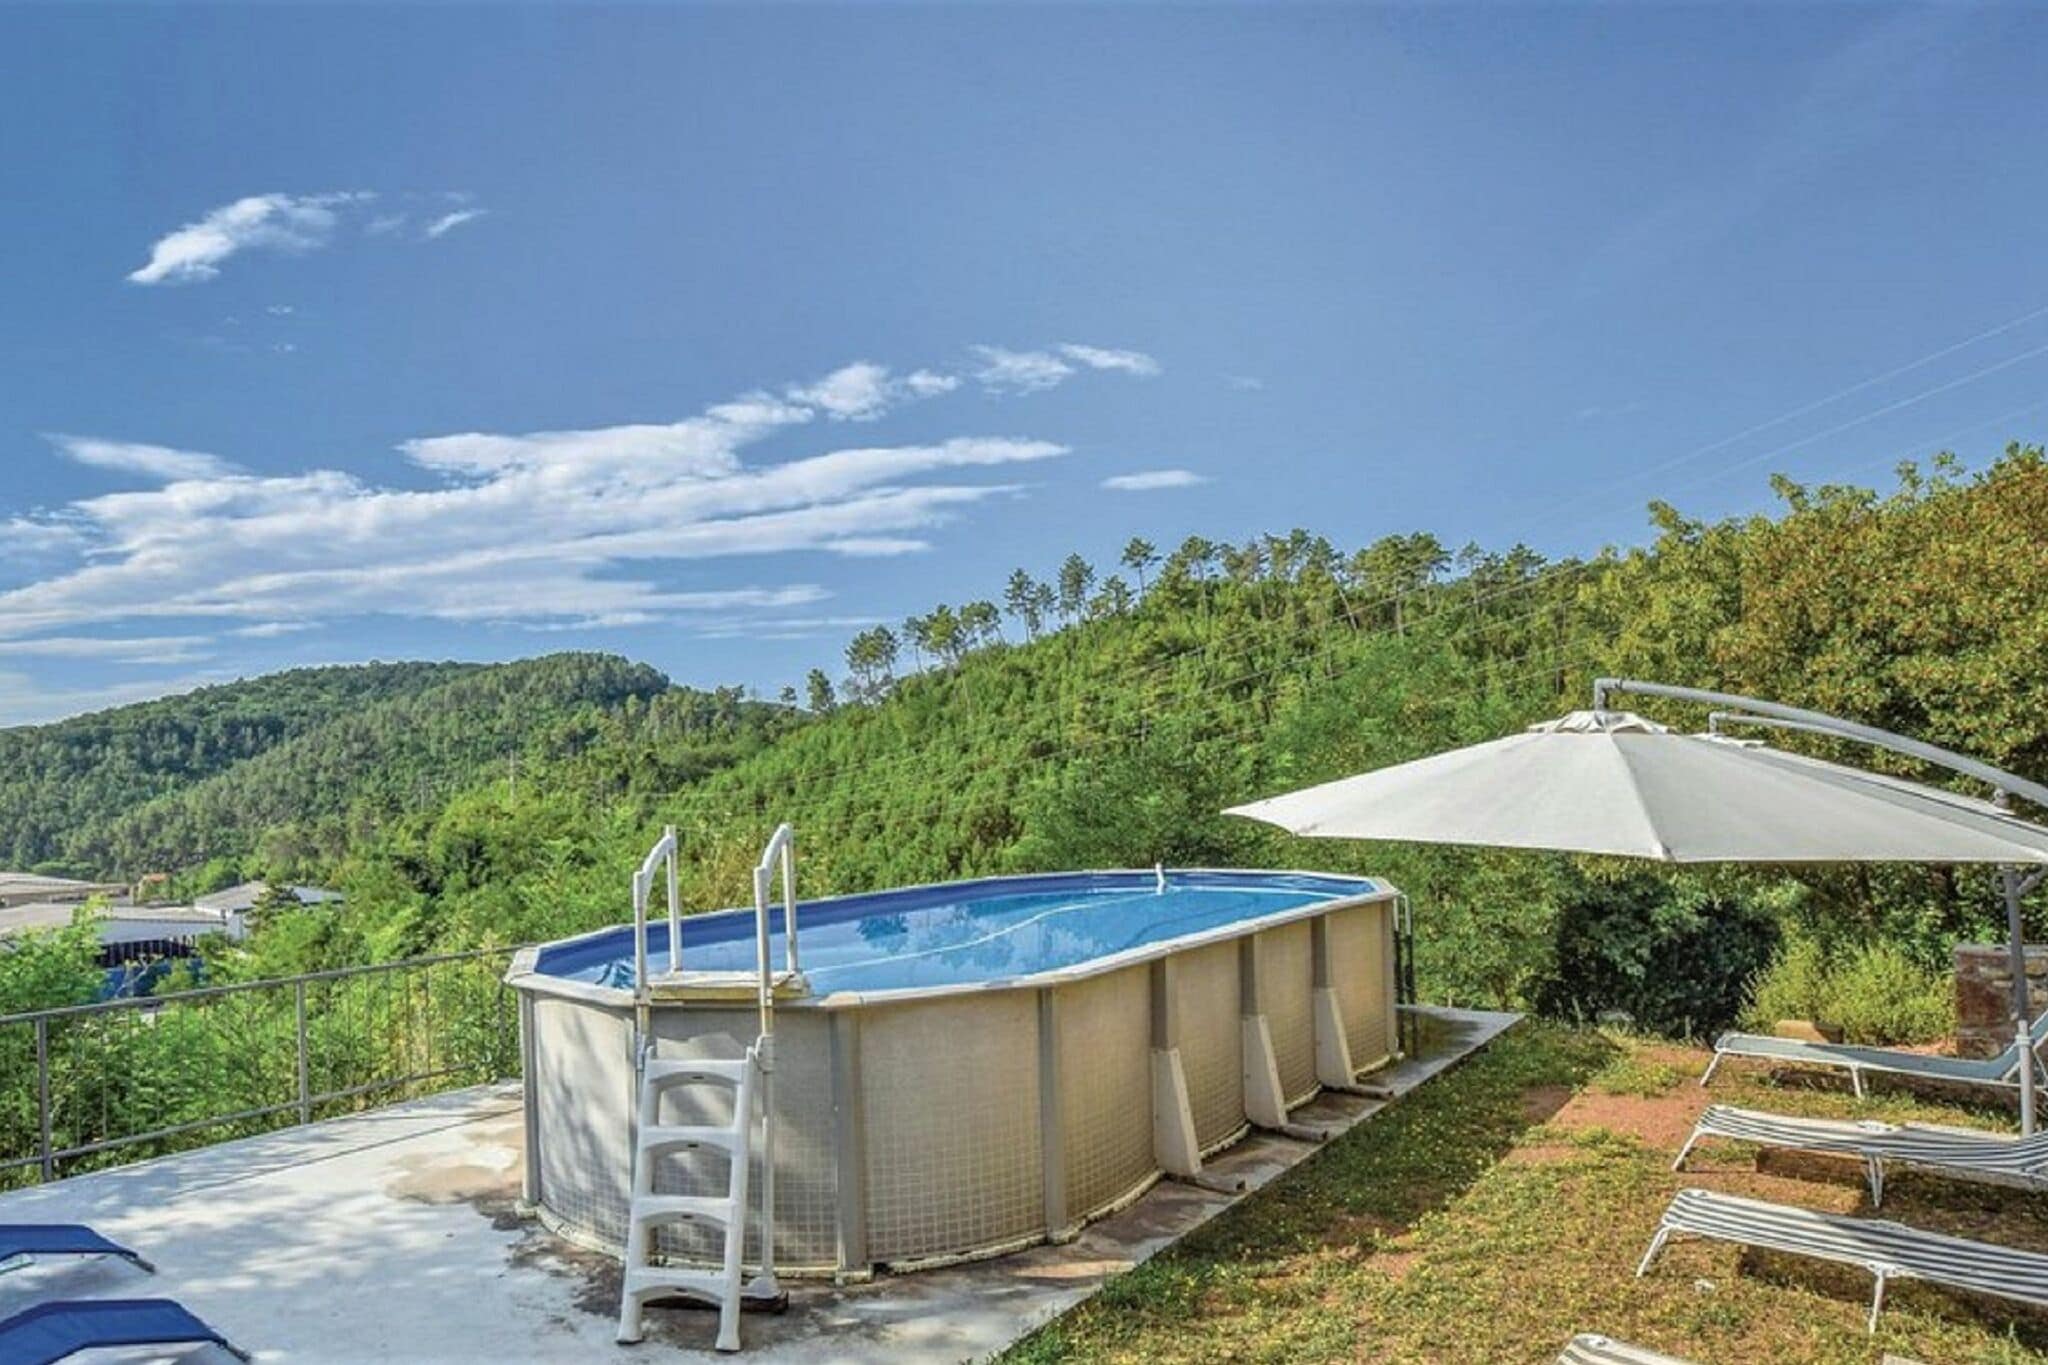 Rural Apartment in Massa Marittima with Swimming Pool